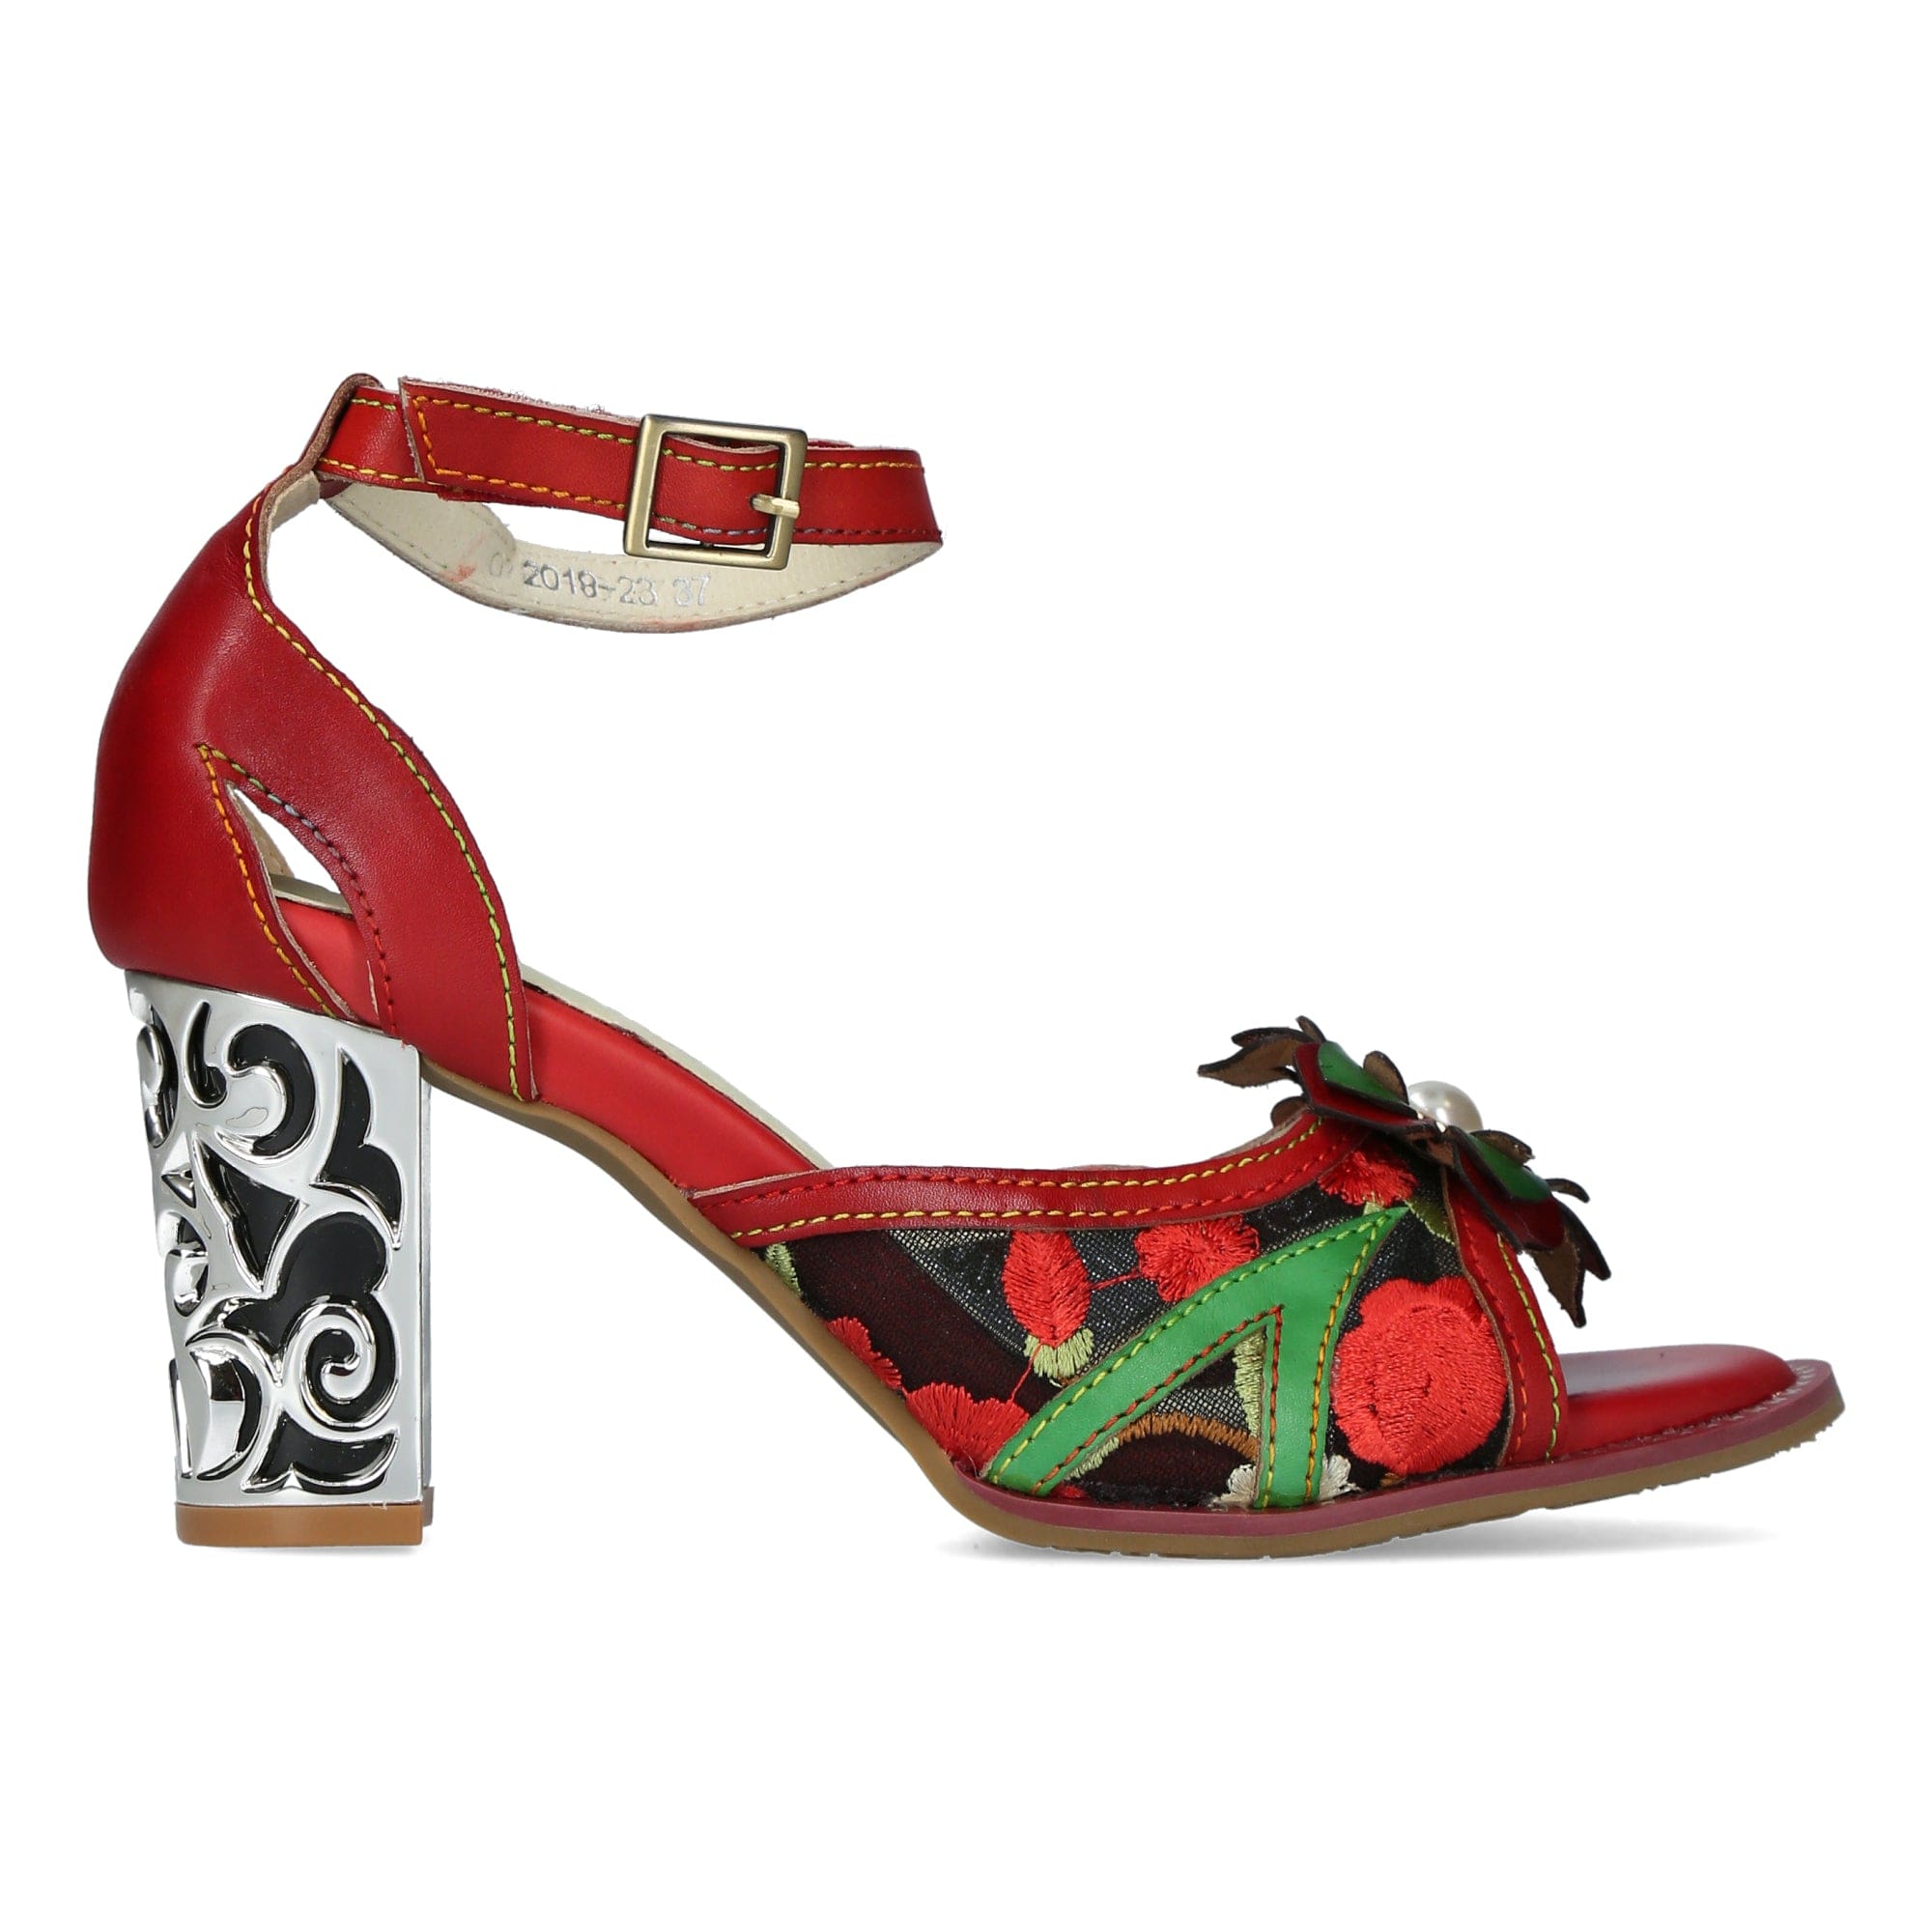 Chaussure LEDAO 23 - 35 / Rouge - Sandale